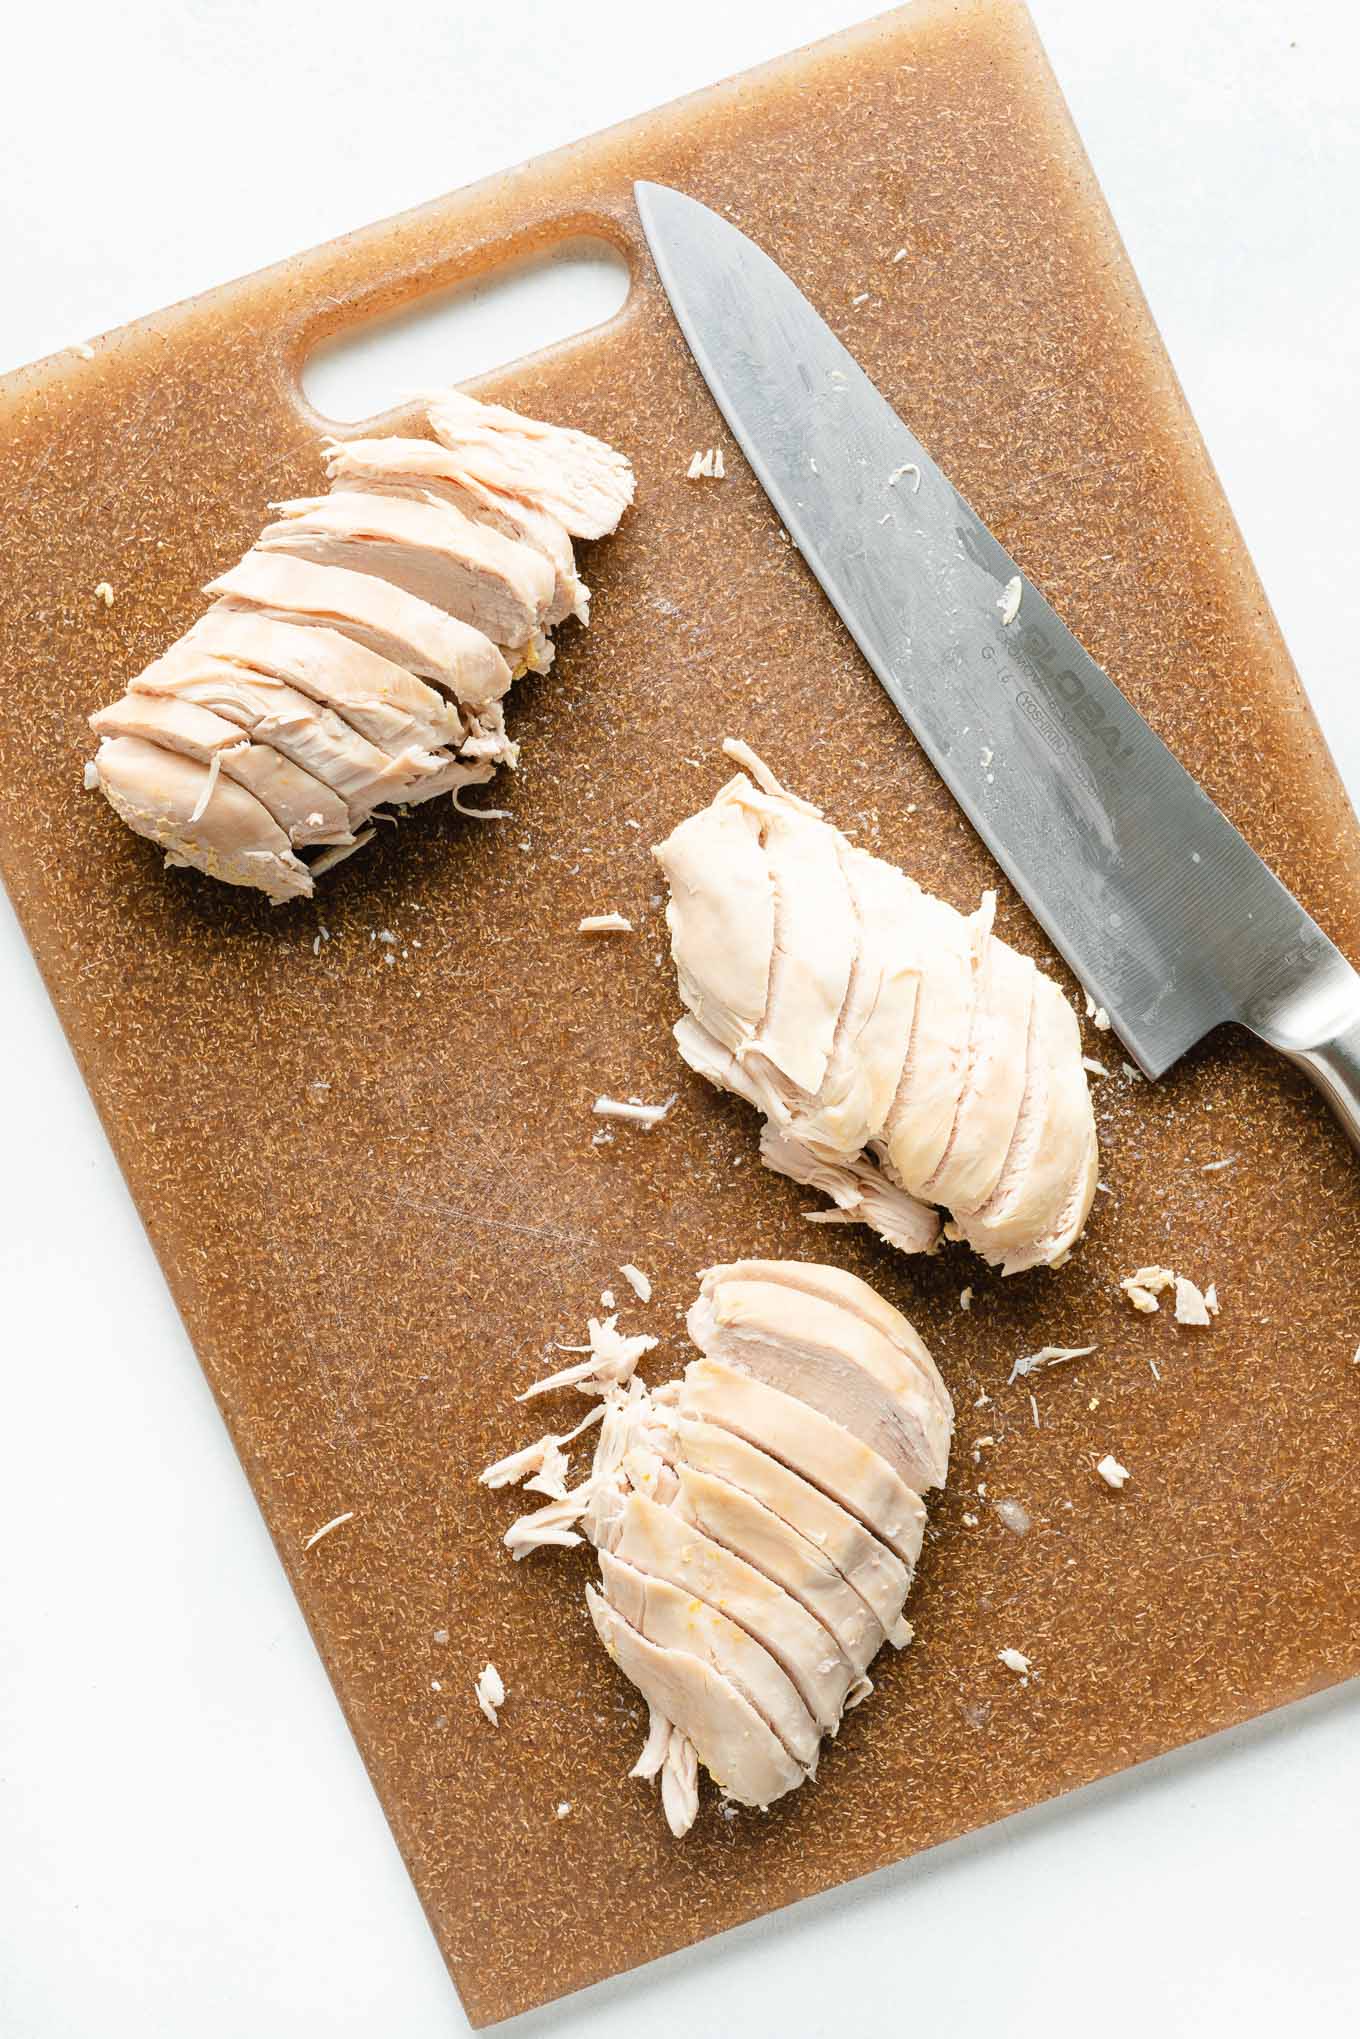 Chicken breast sliced on brown cutting board